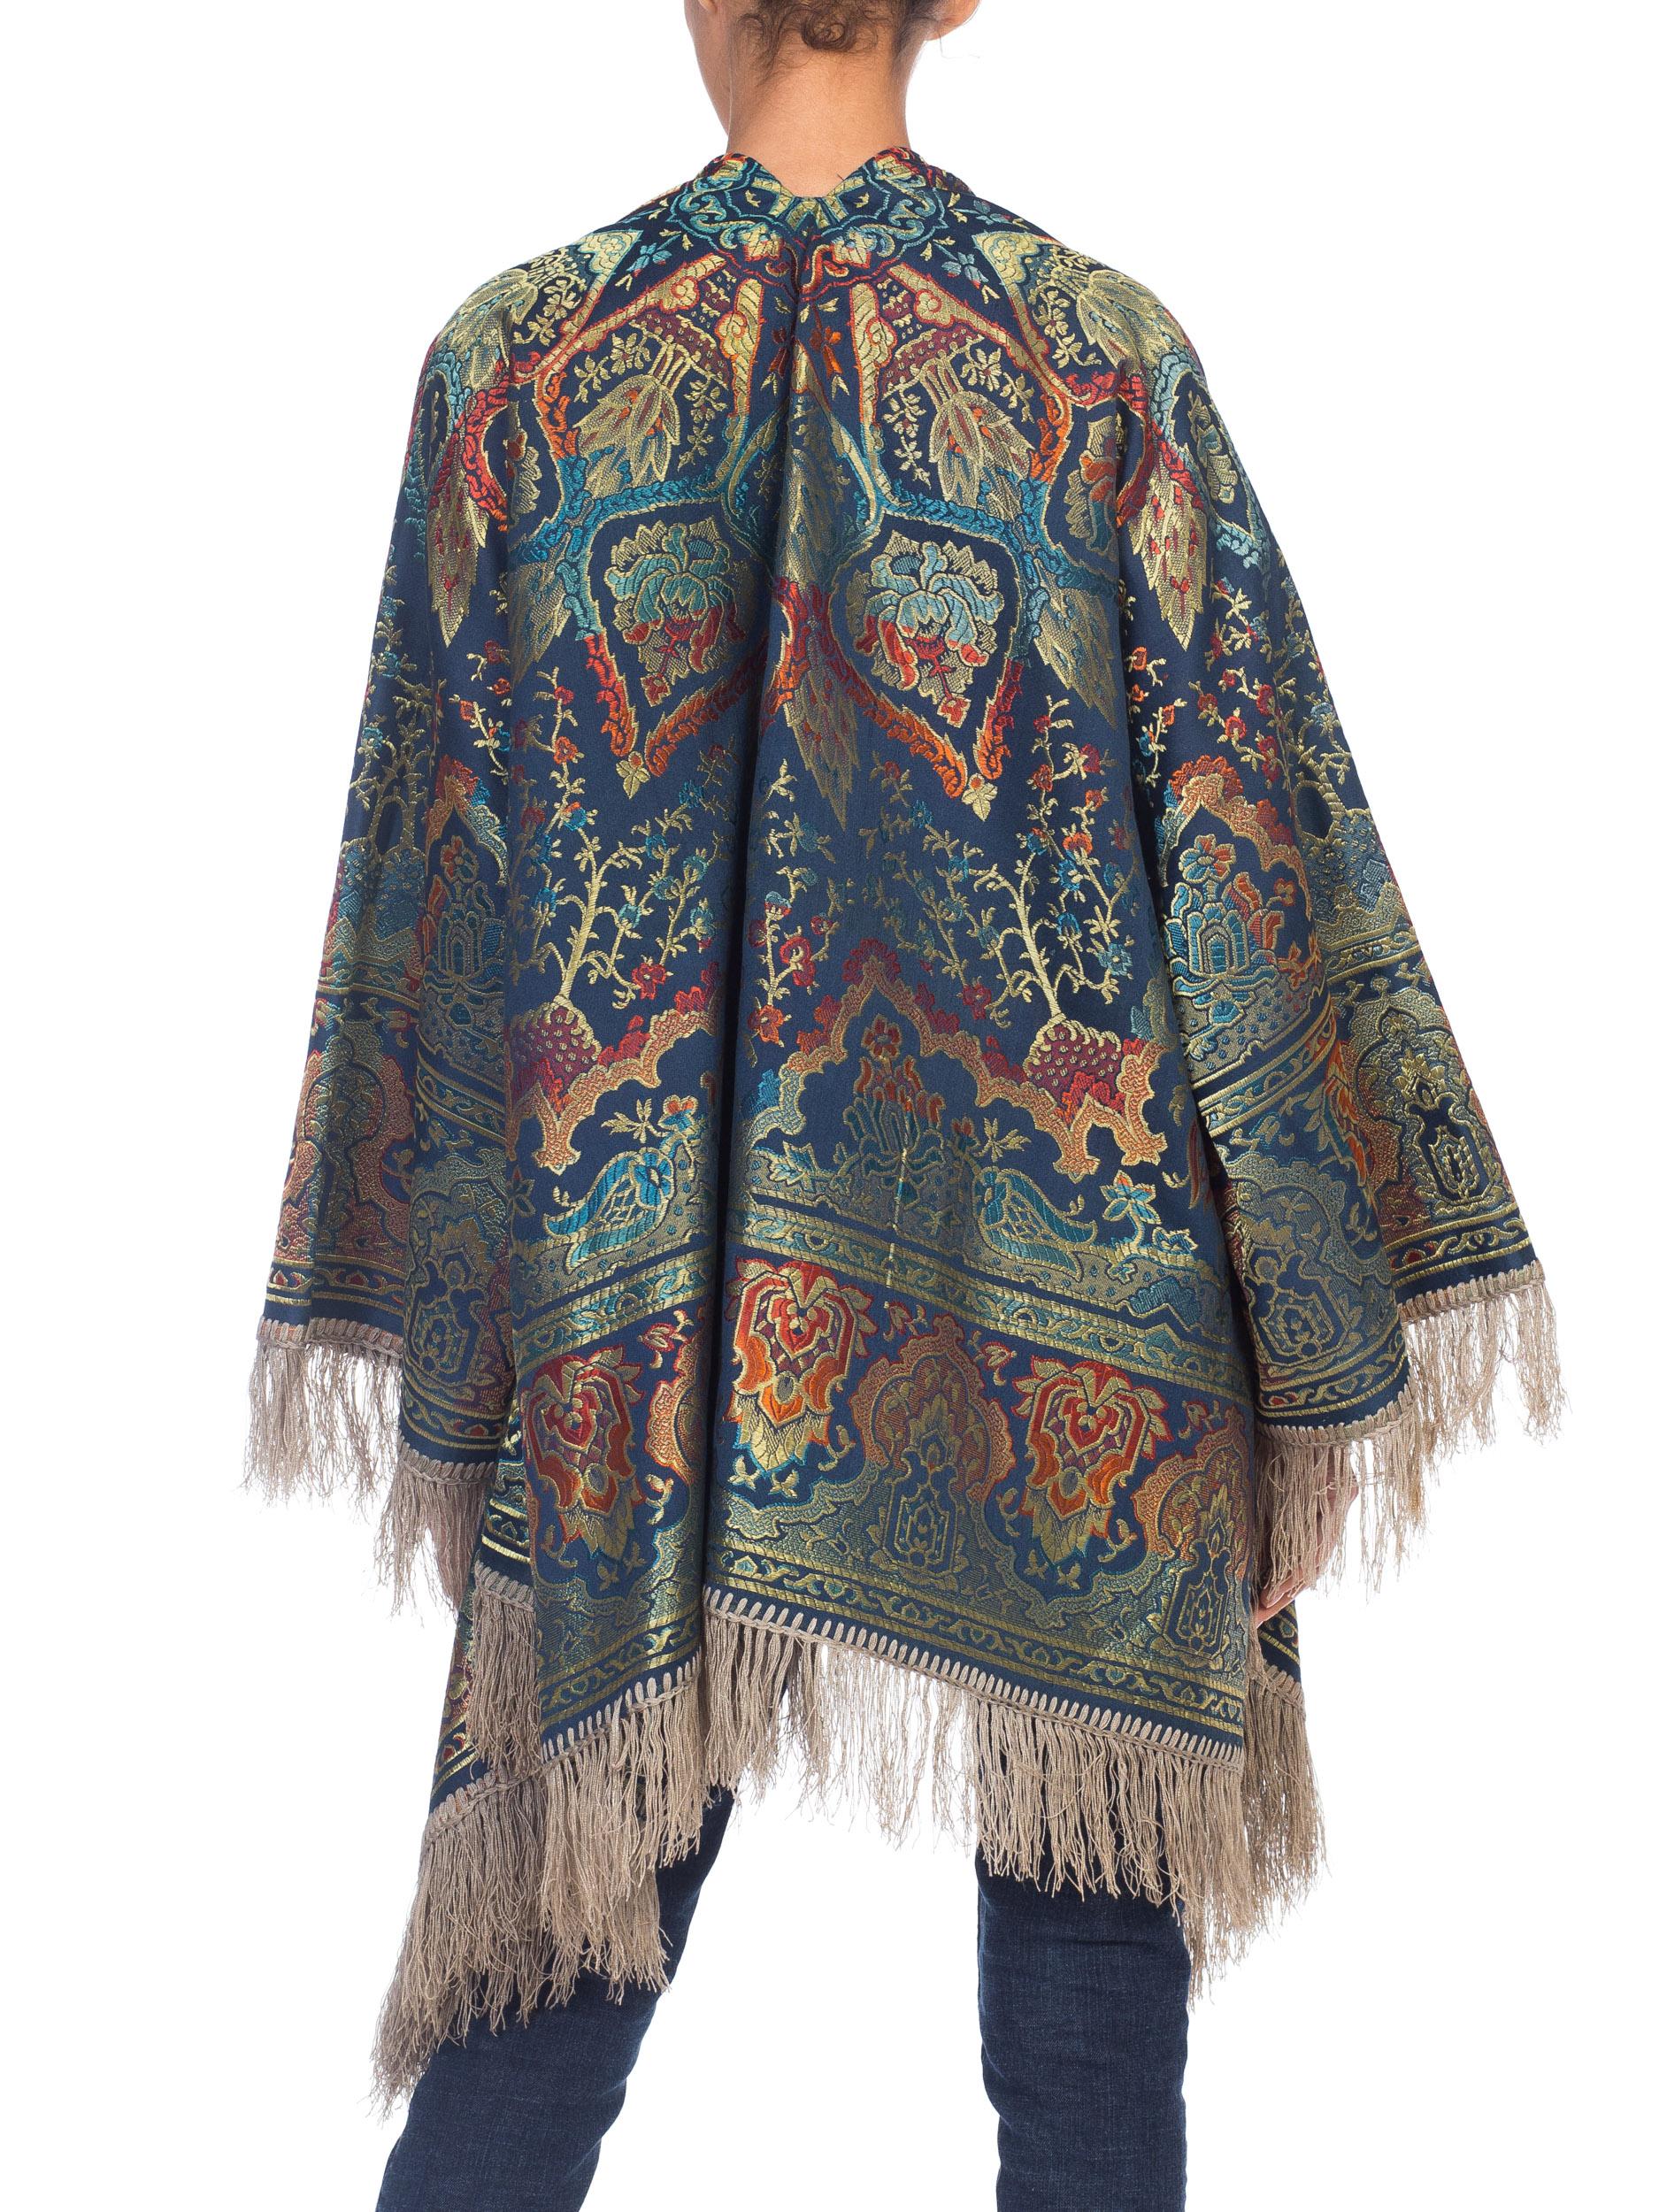 Morphew Swing Coat Kimono Jacket Made From 1940s Fabric Damen